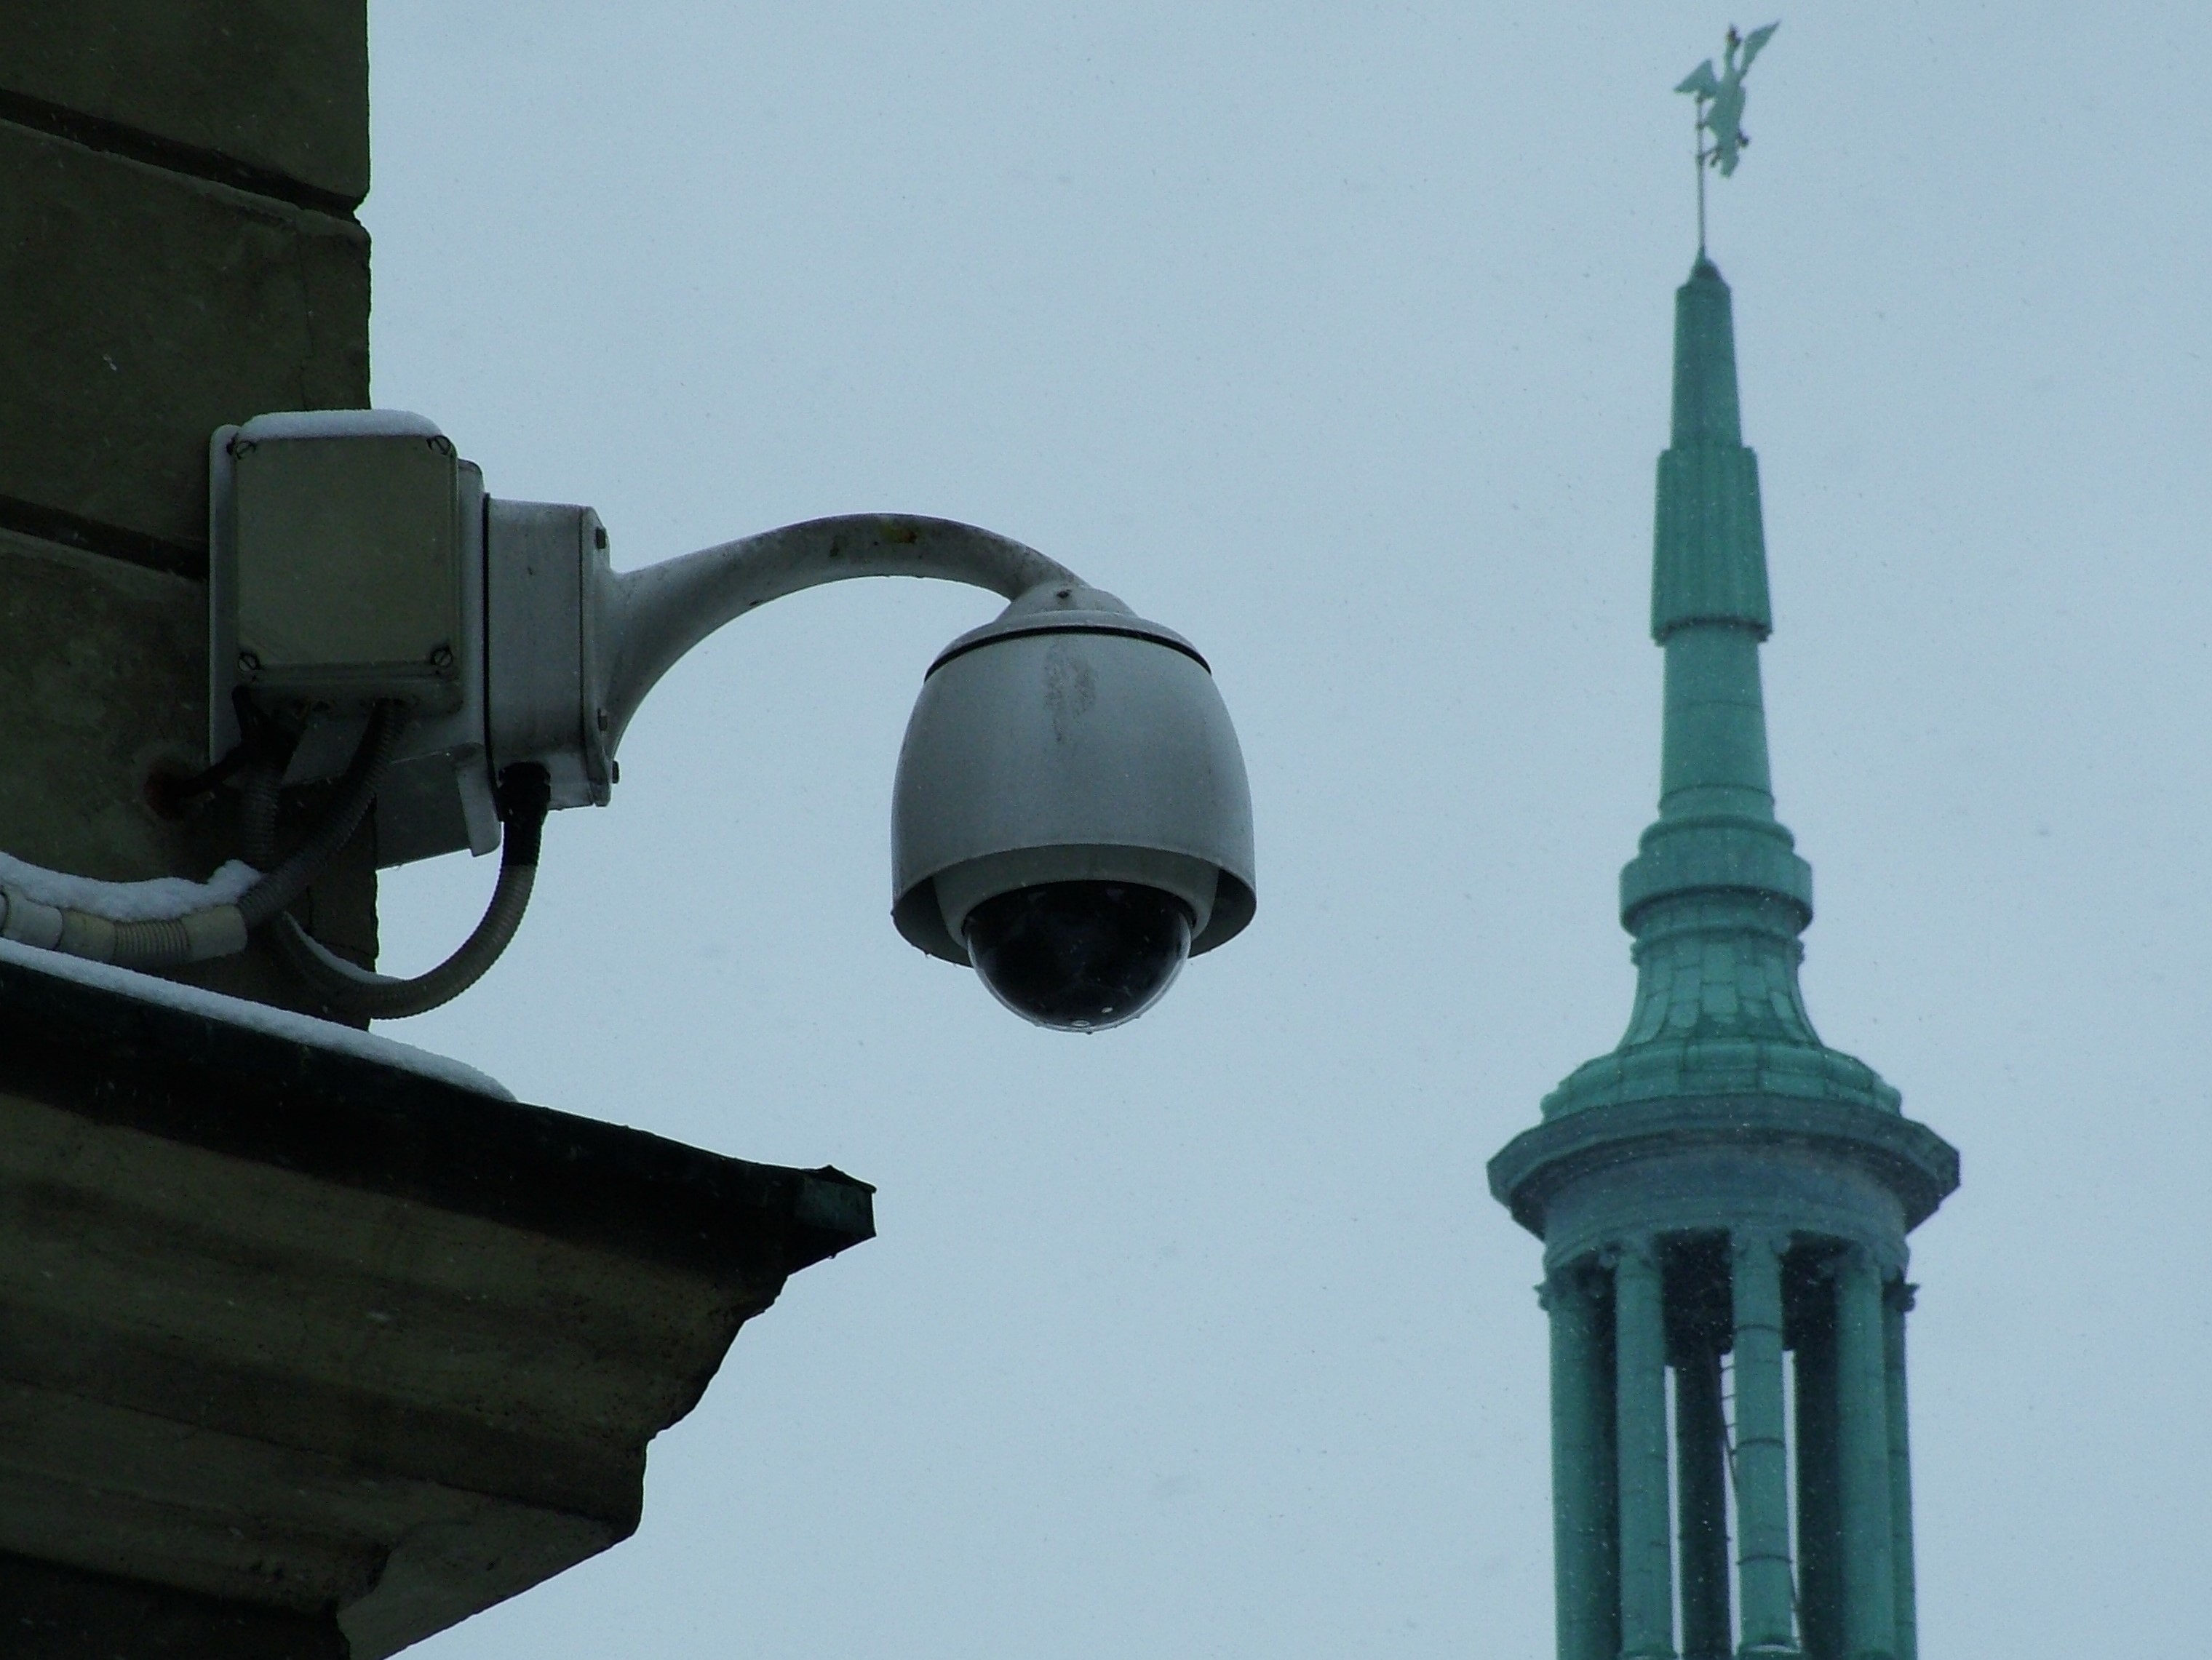 kamery monitoring  - Wojtek Wardejn